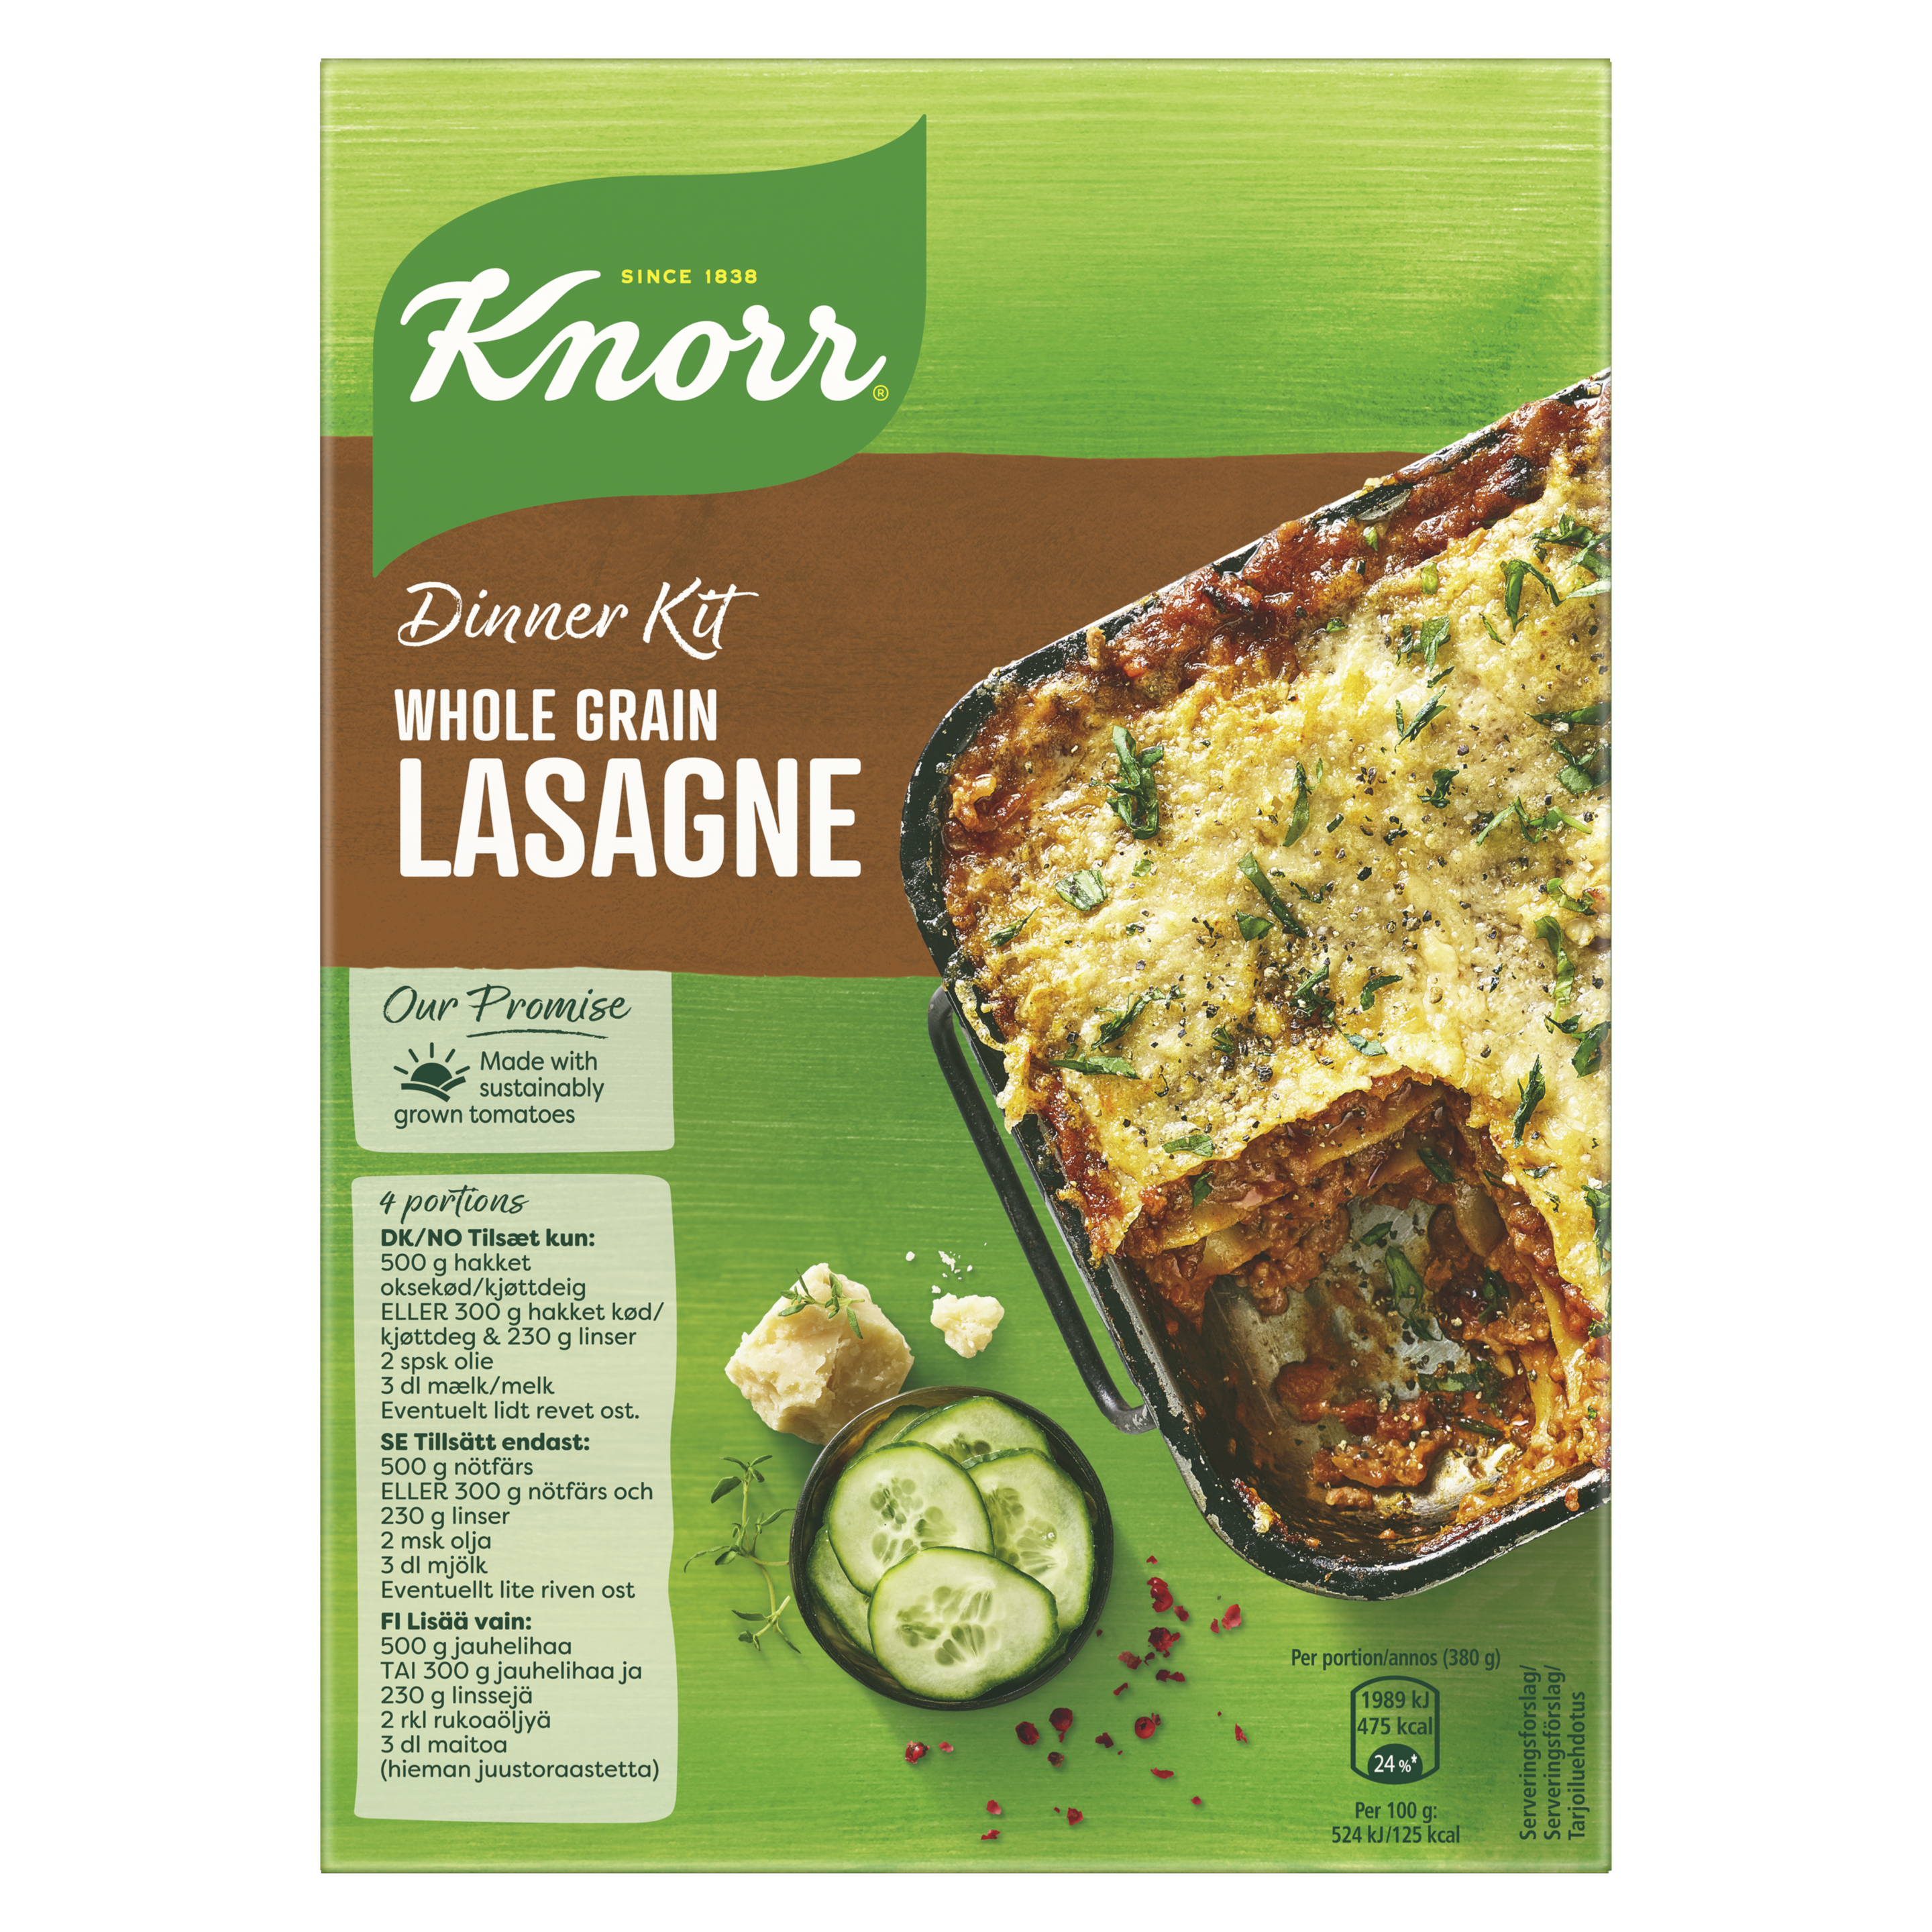 Dinner Kit Whole Grain Lasagne